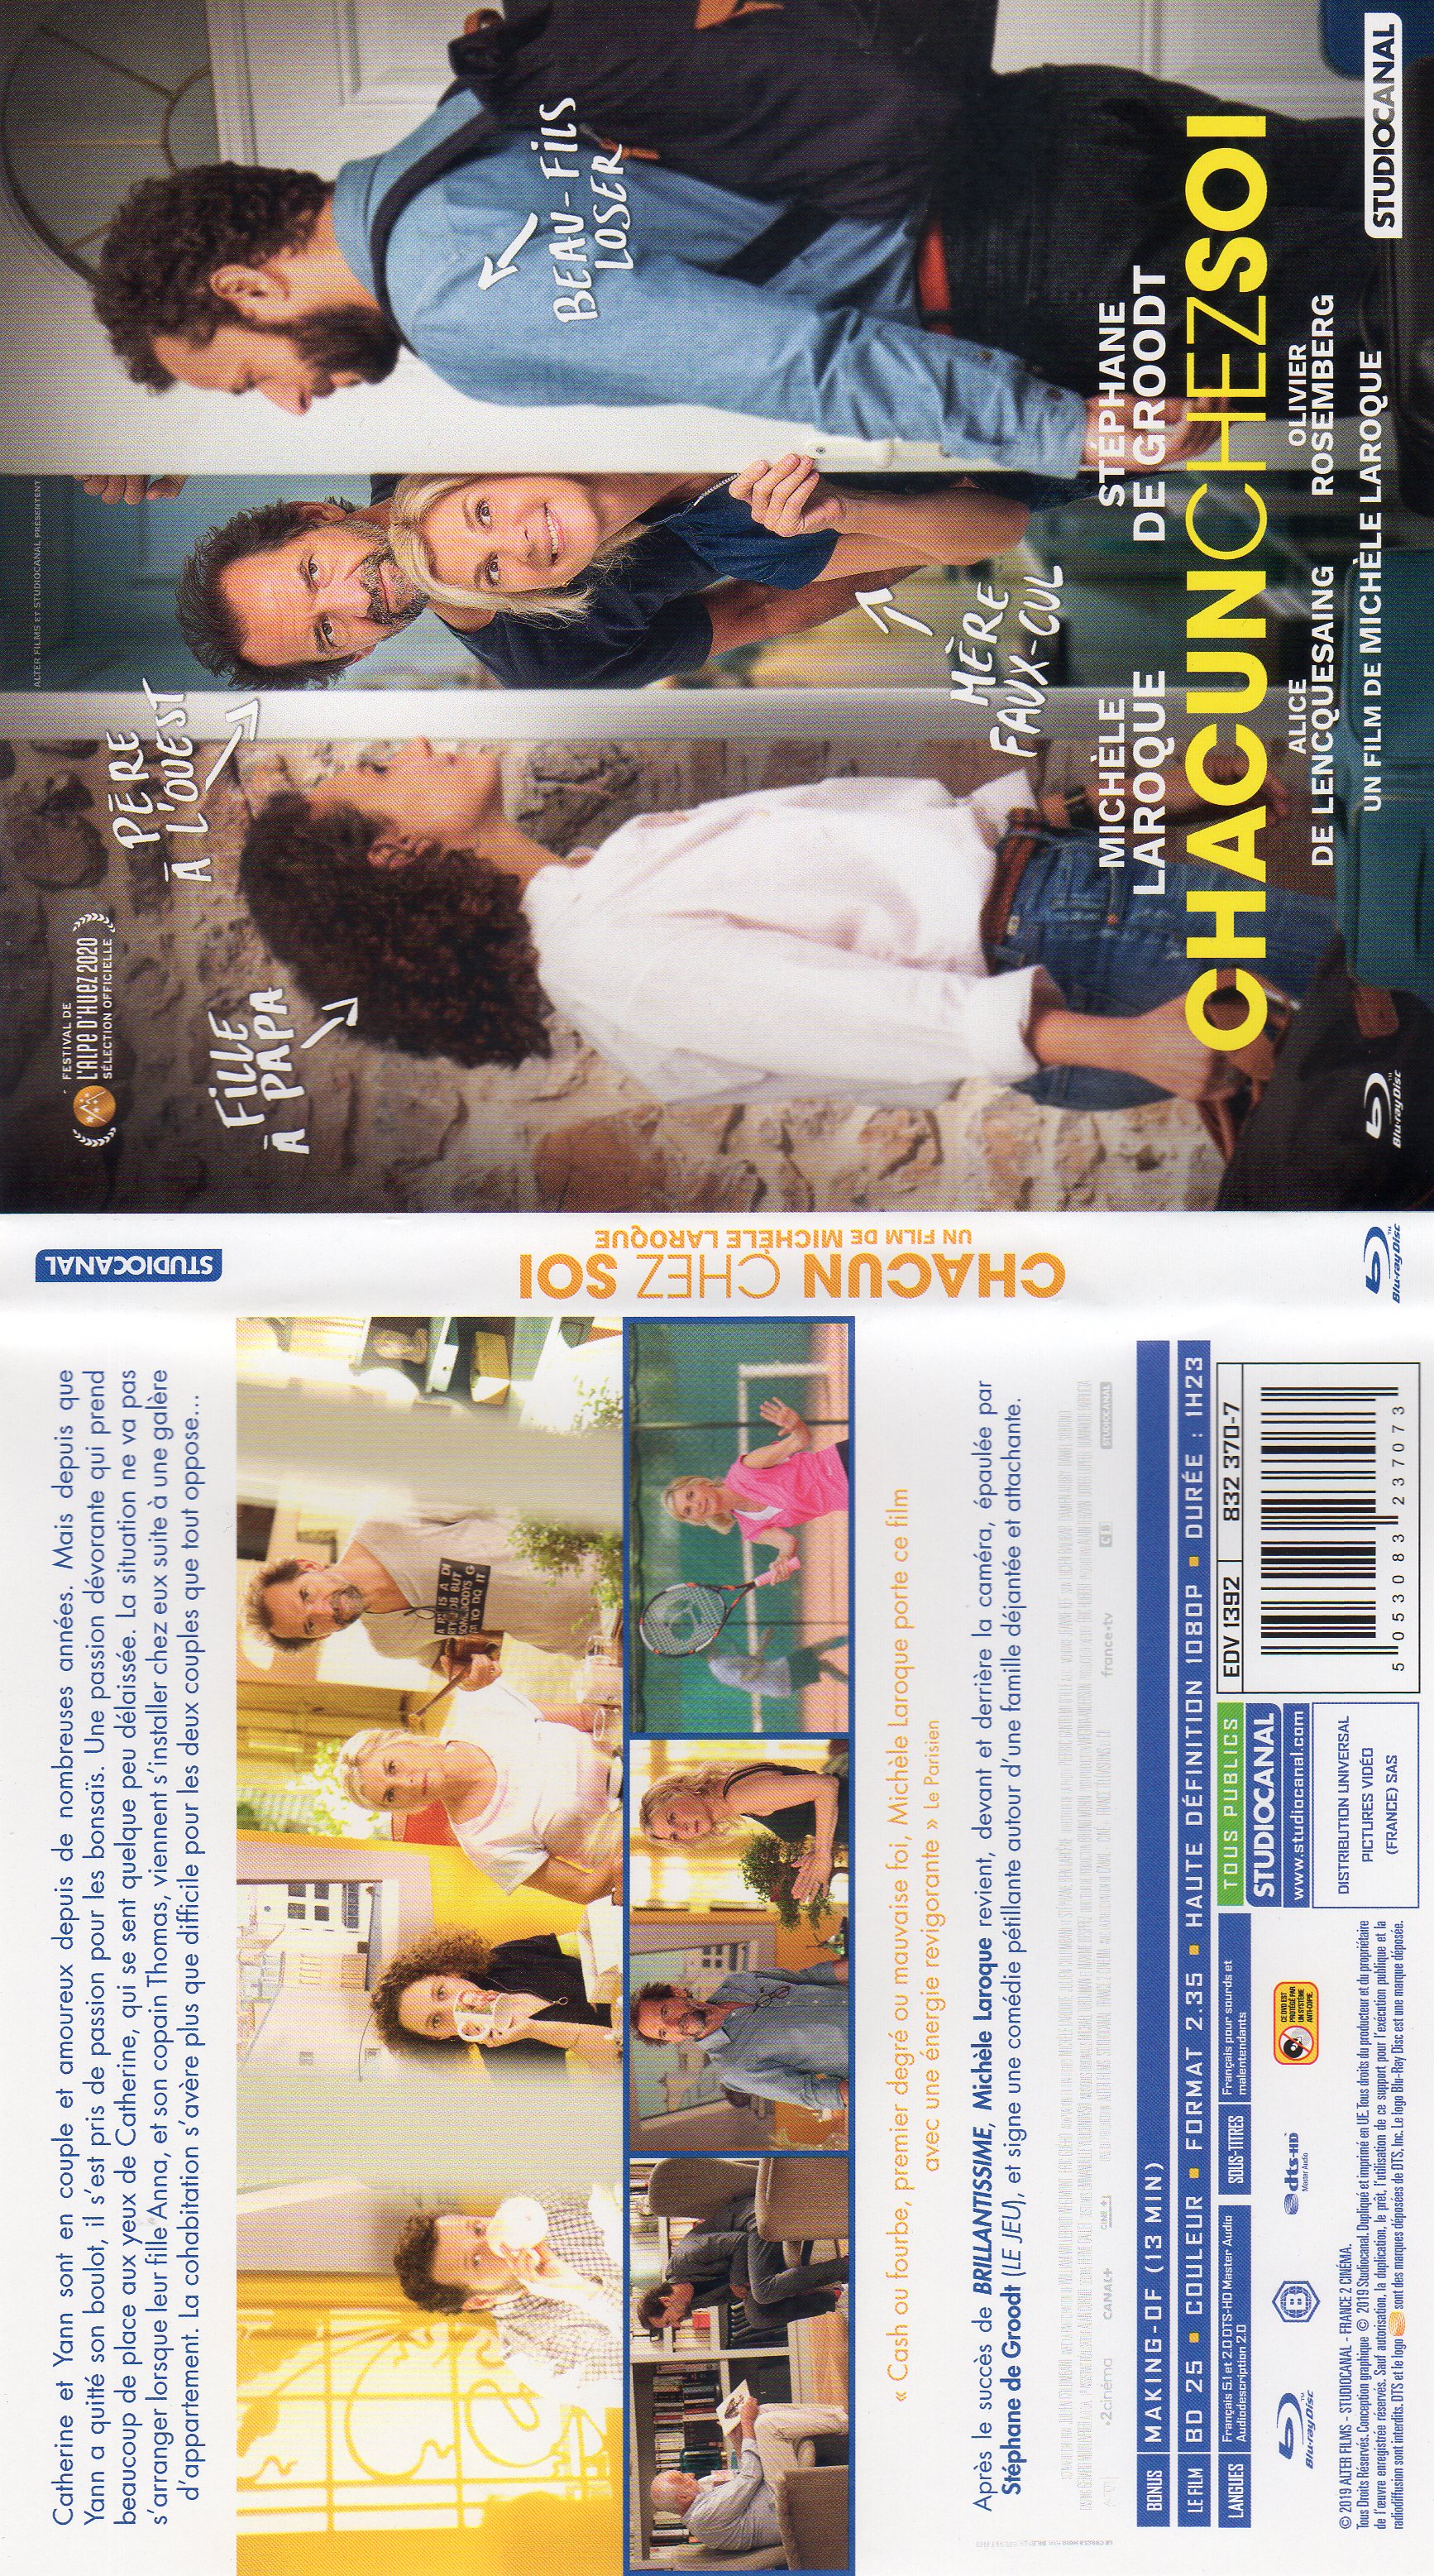 Jaquette DVD Chacun chez soi (BLU-RAY)